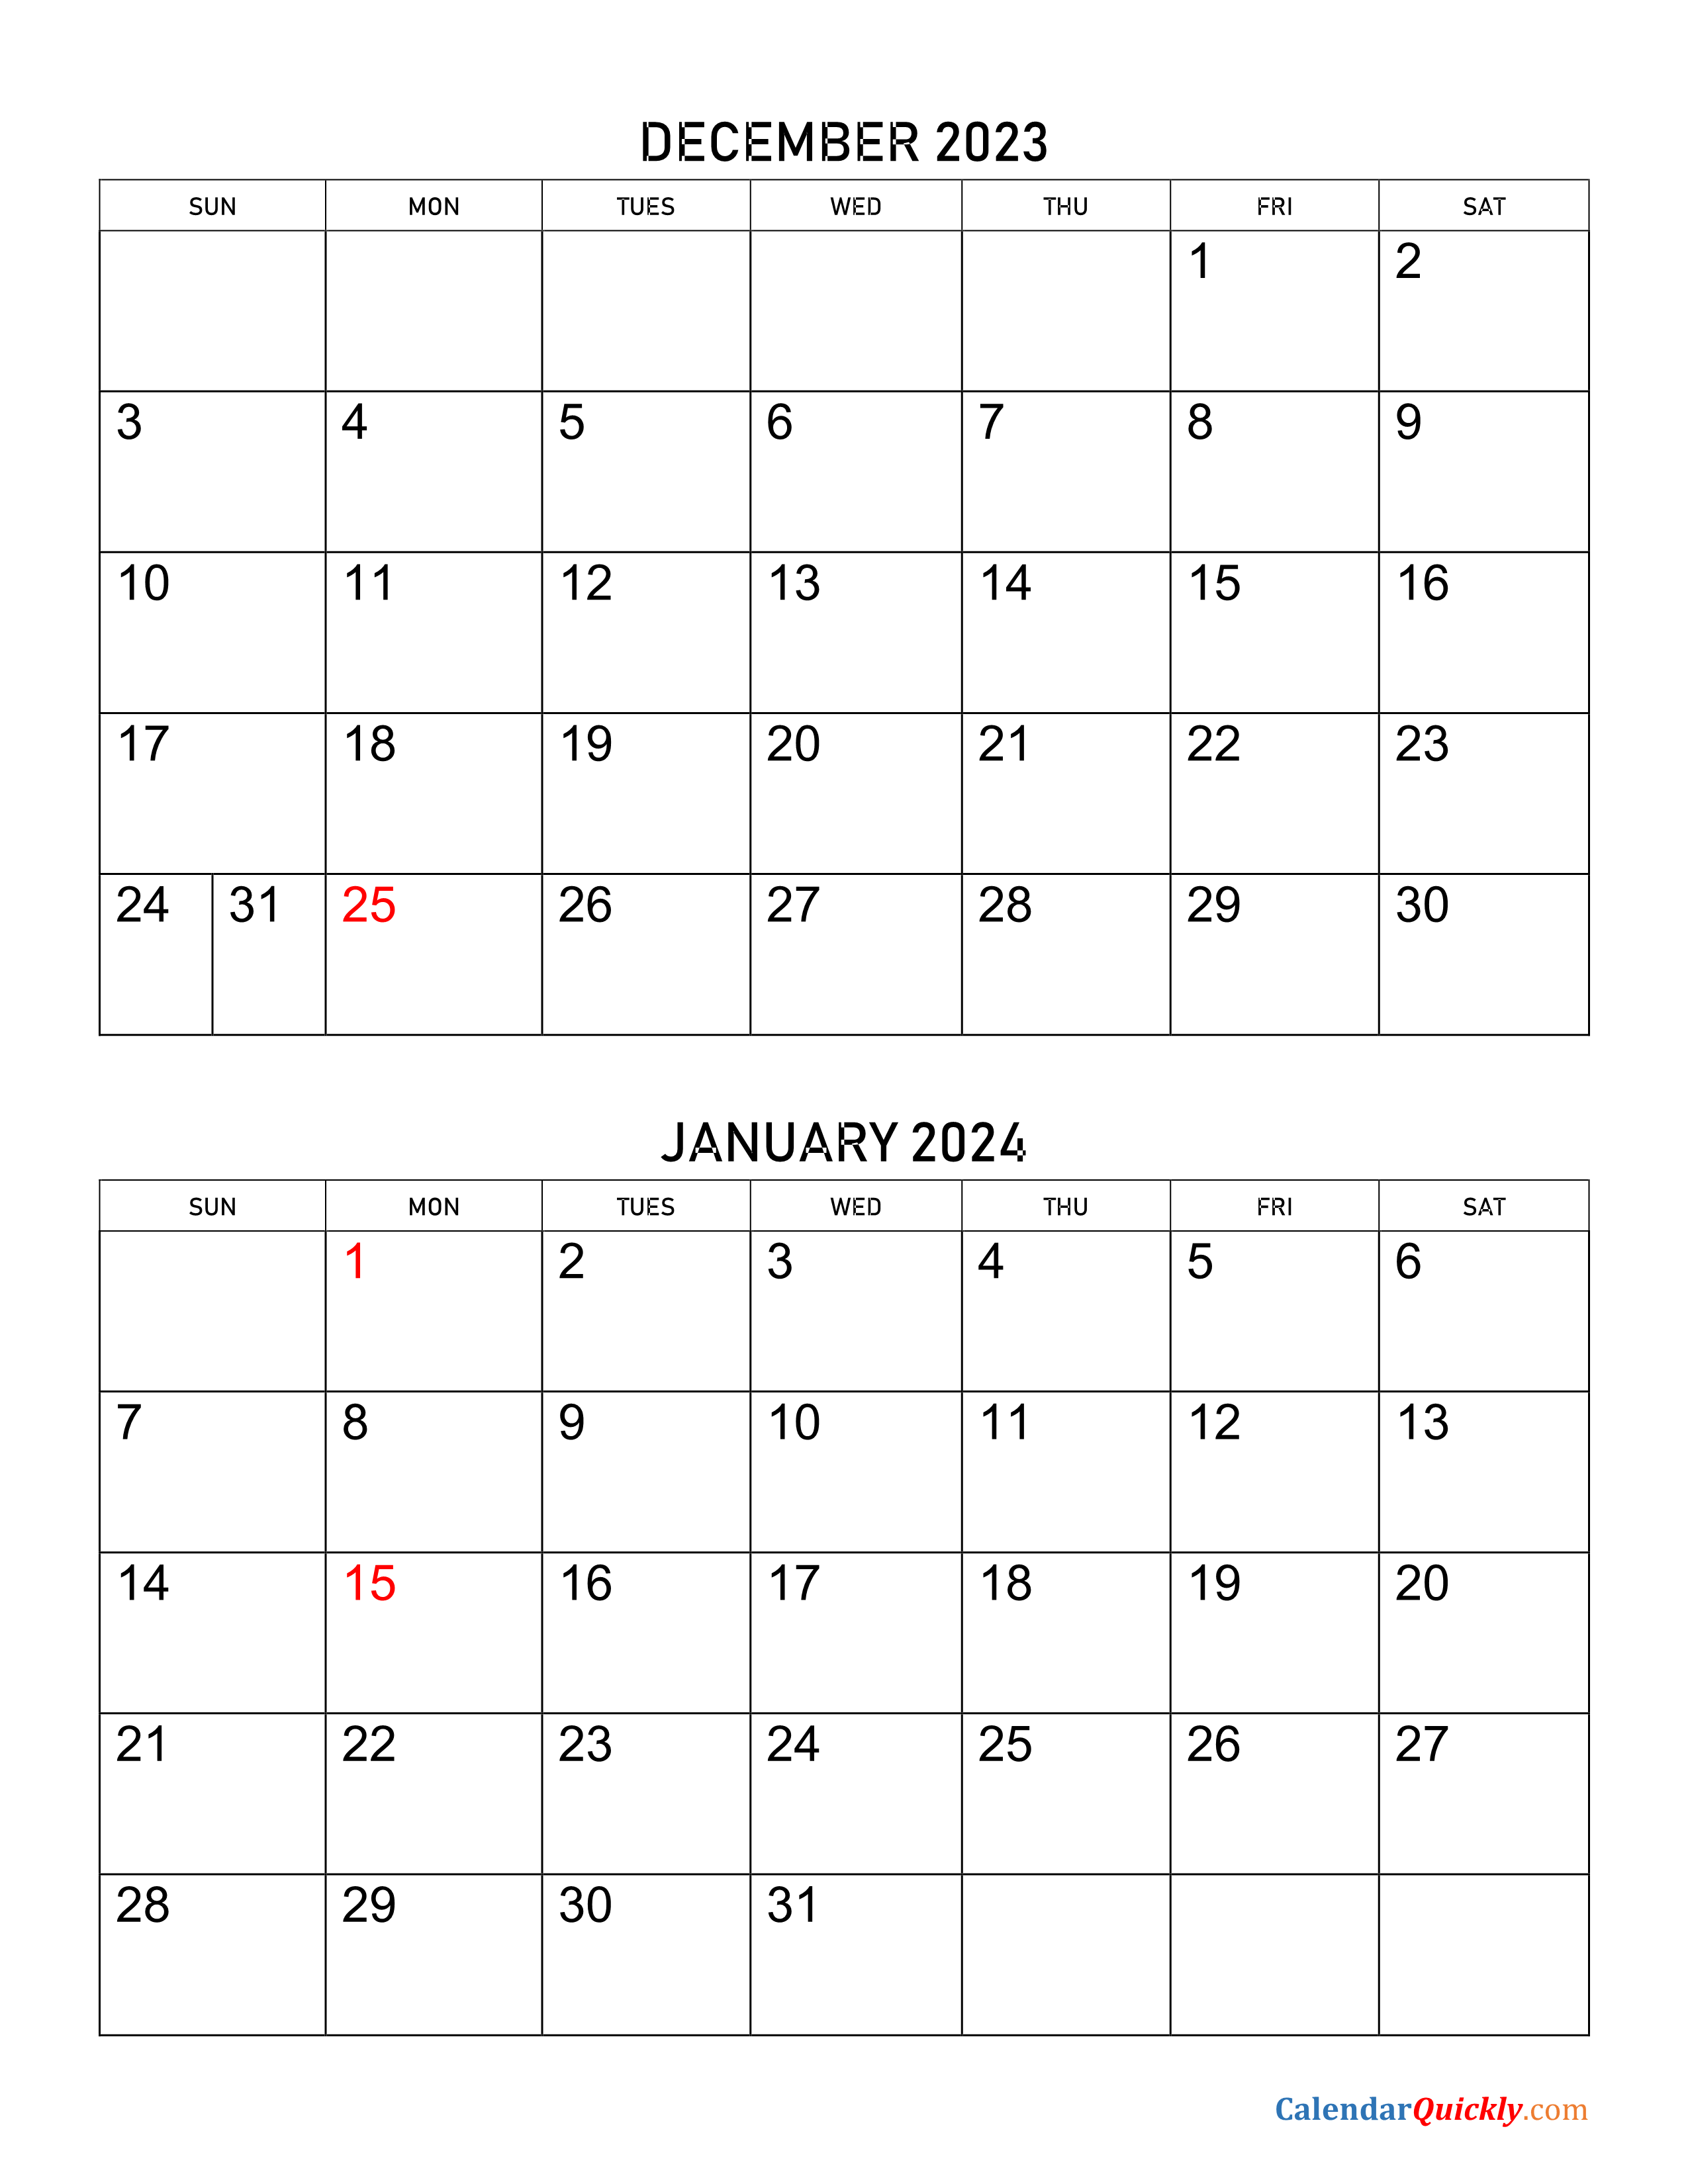 December 2023 and January 2024 Calendar Calendar Quickly